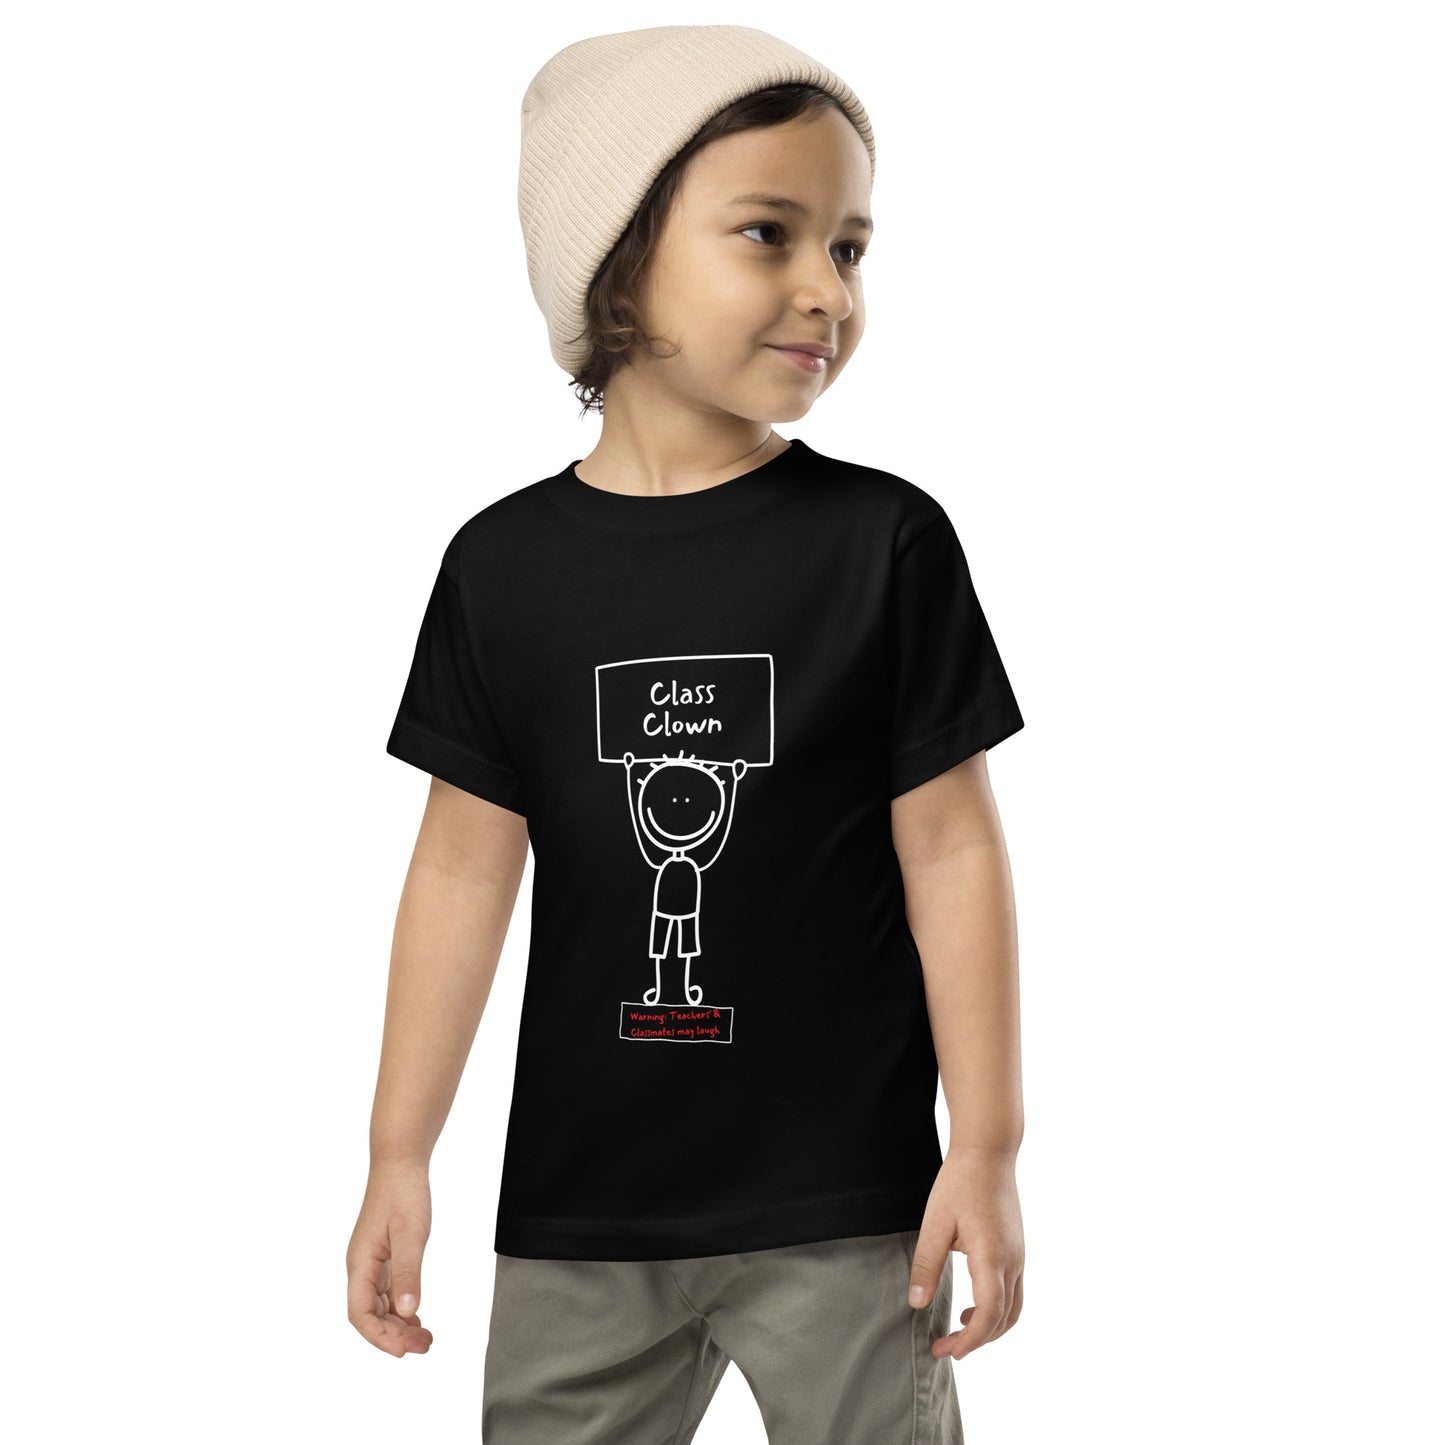 Payaso de clase (niño) - Camiseta de manga corta para niños pequeños